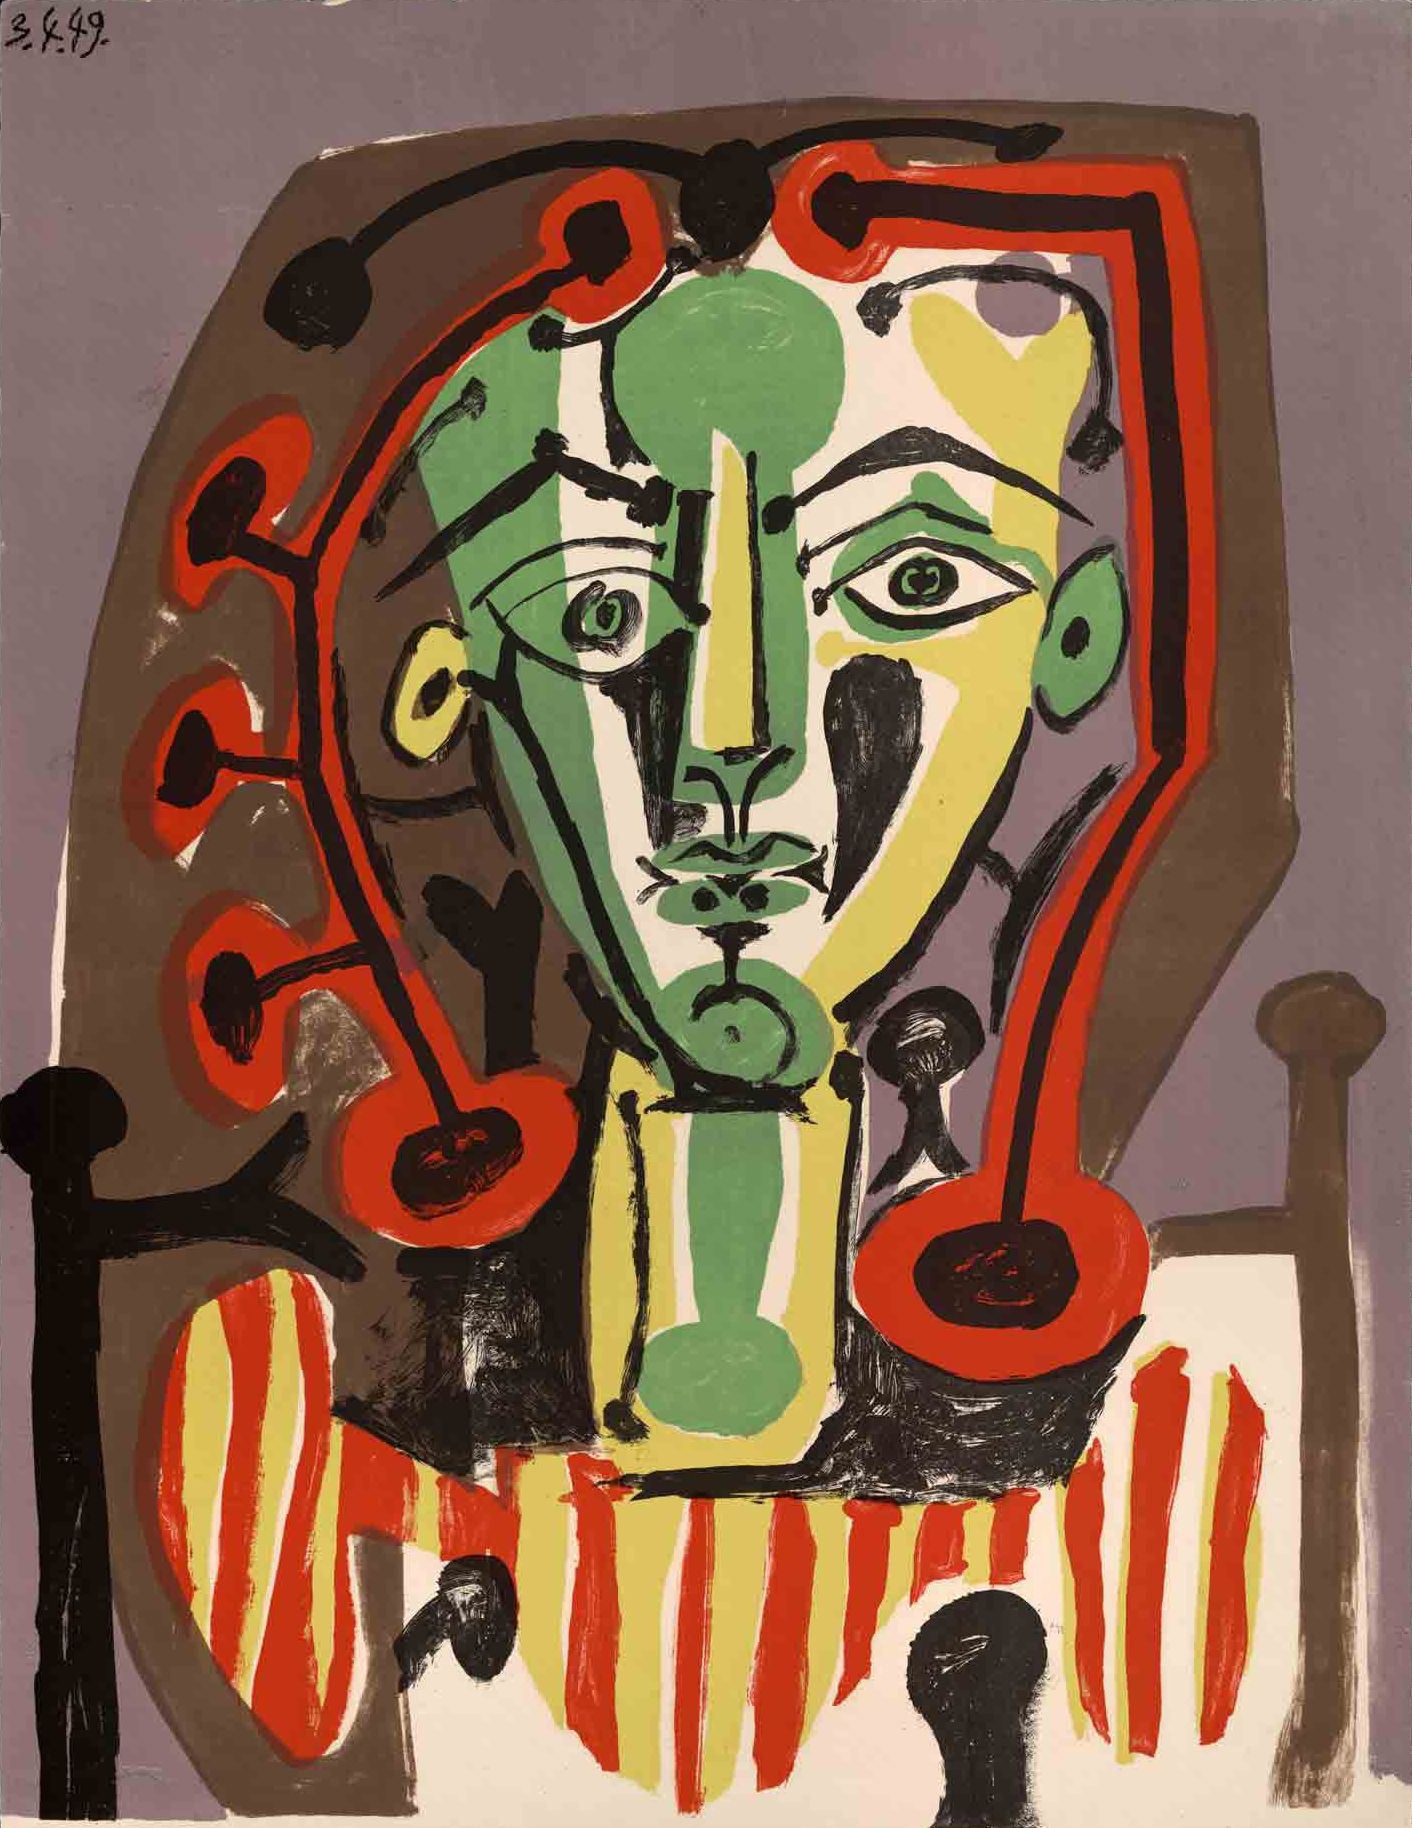 2015 Italia Figura con blusa de rayas (1949) © Sucesión Pablo Picasso, VEGAP